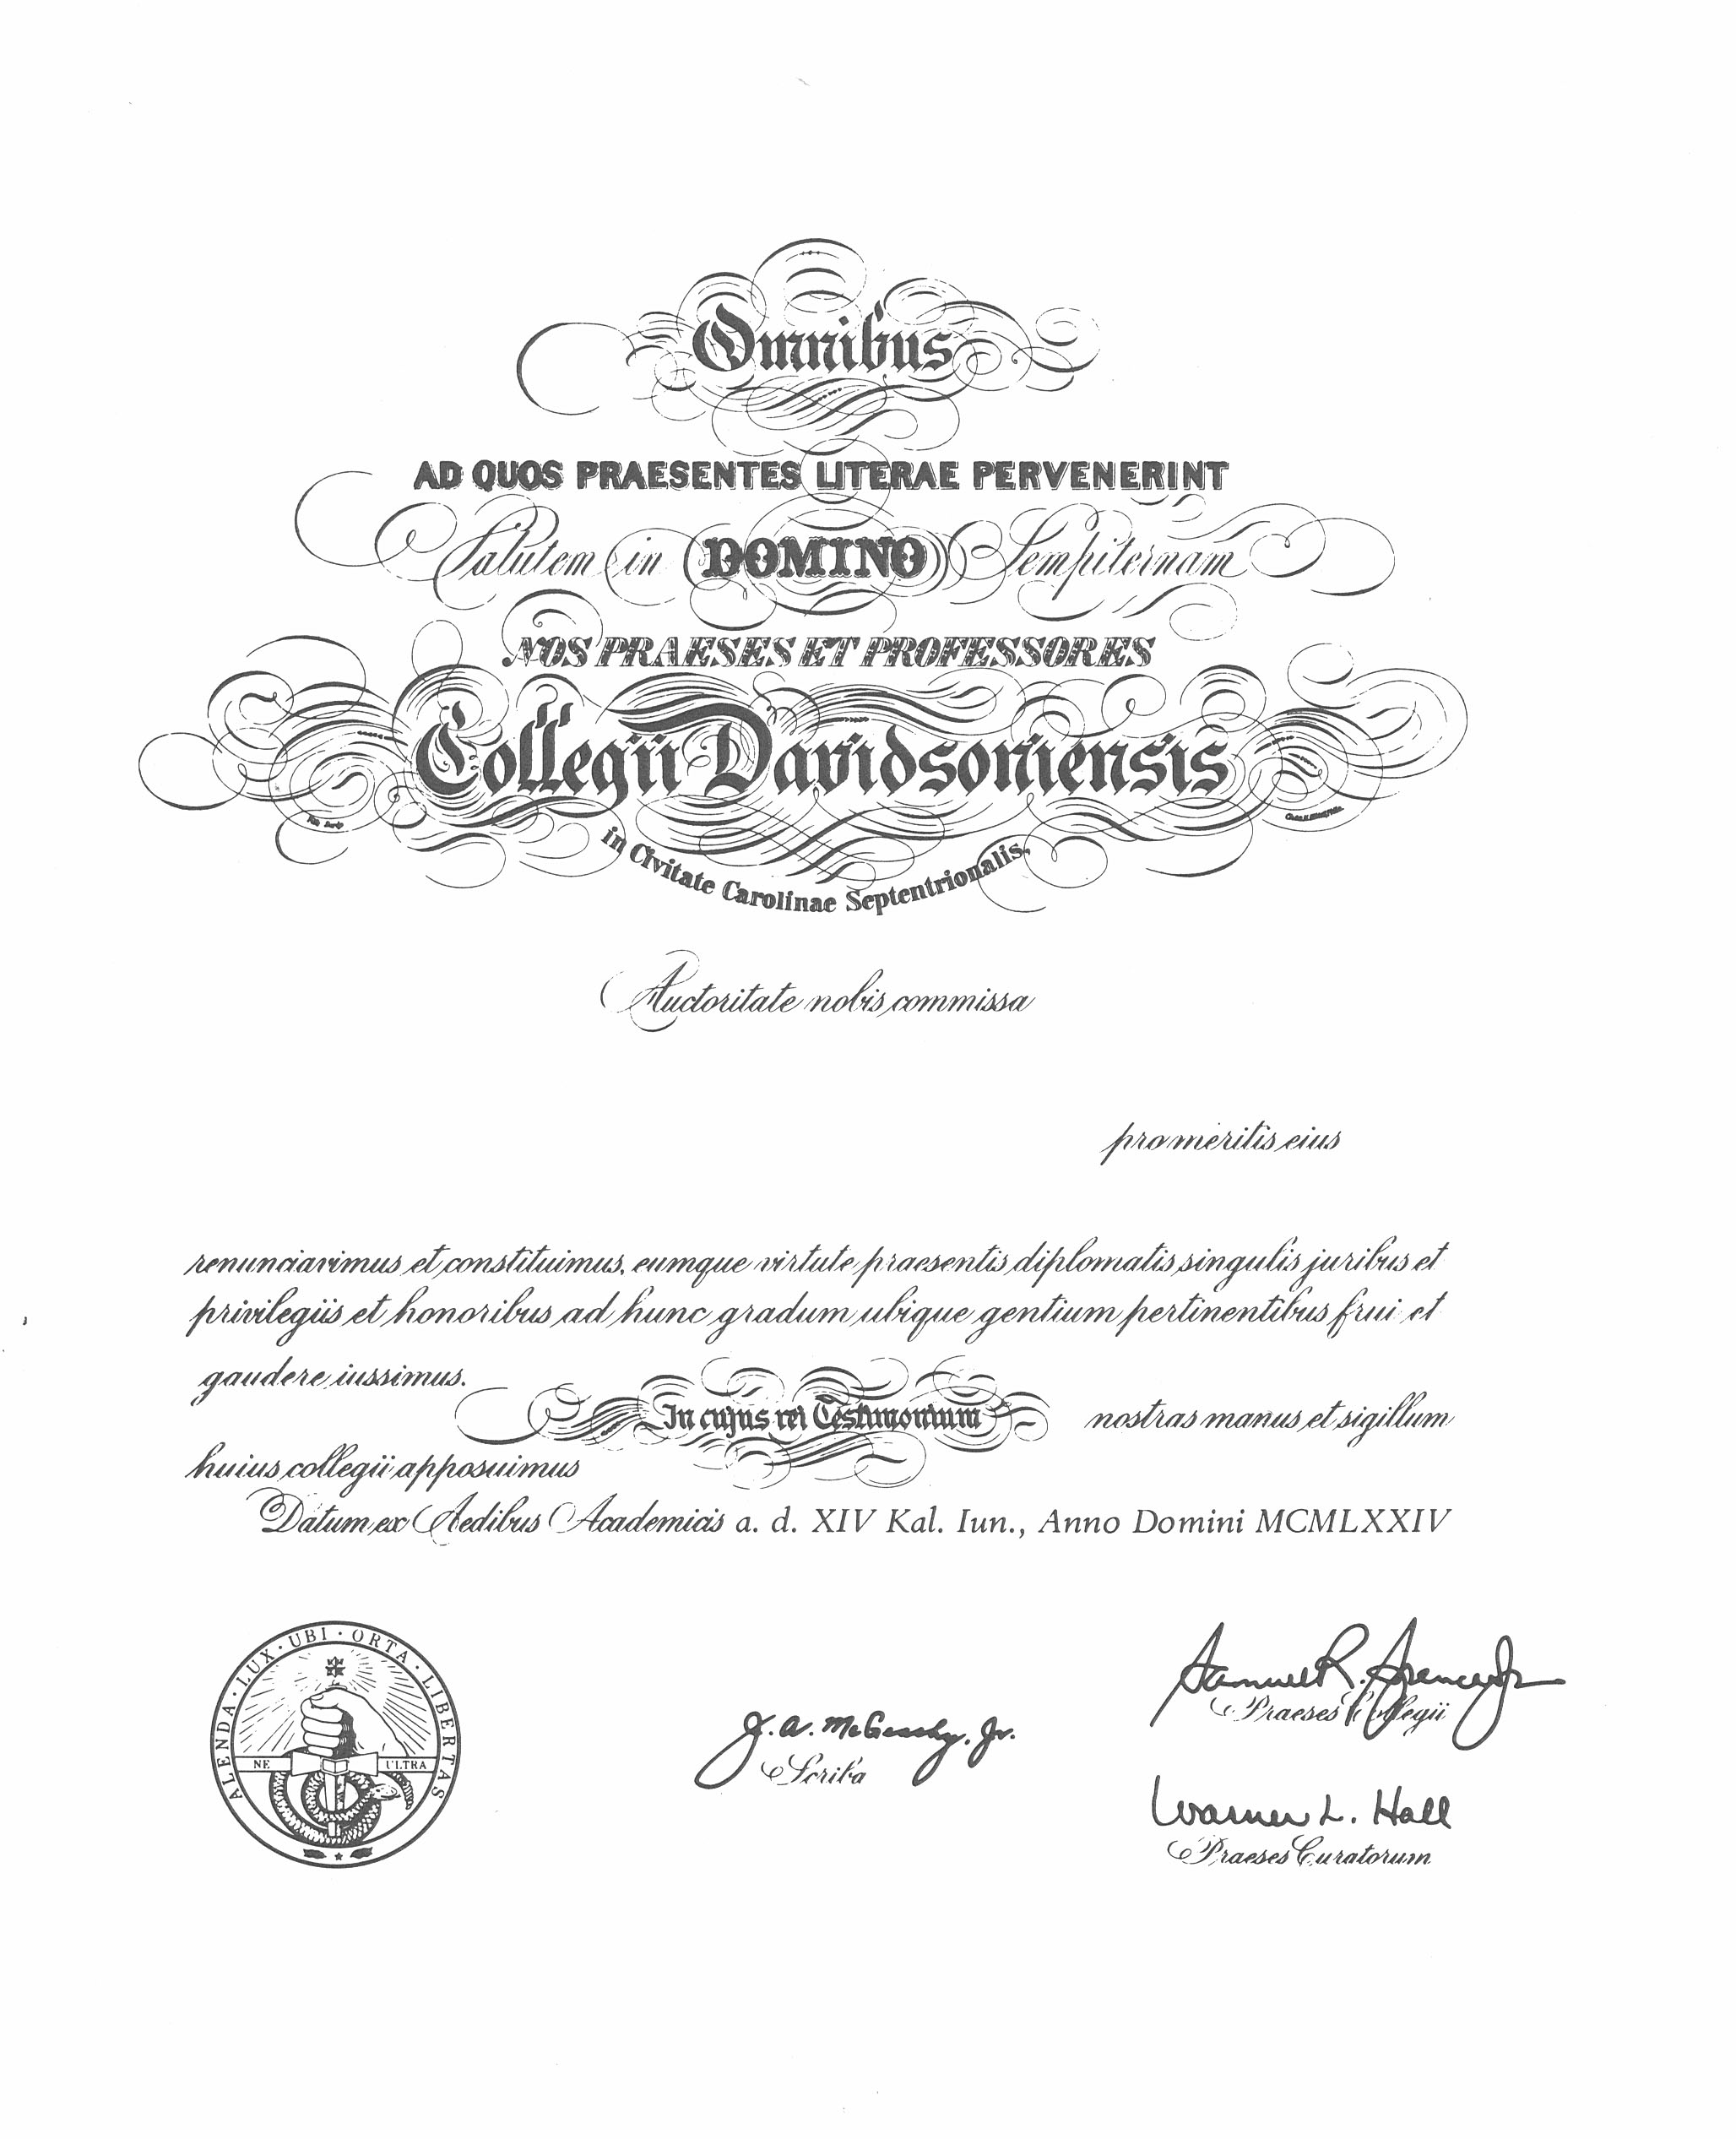 Davidson diploma